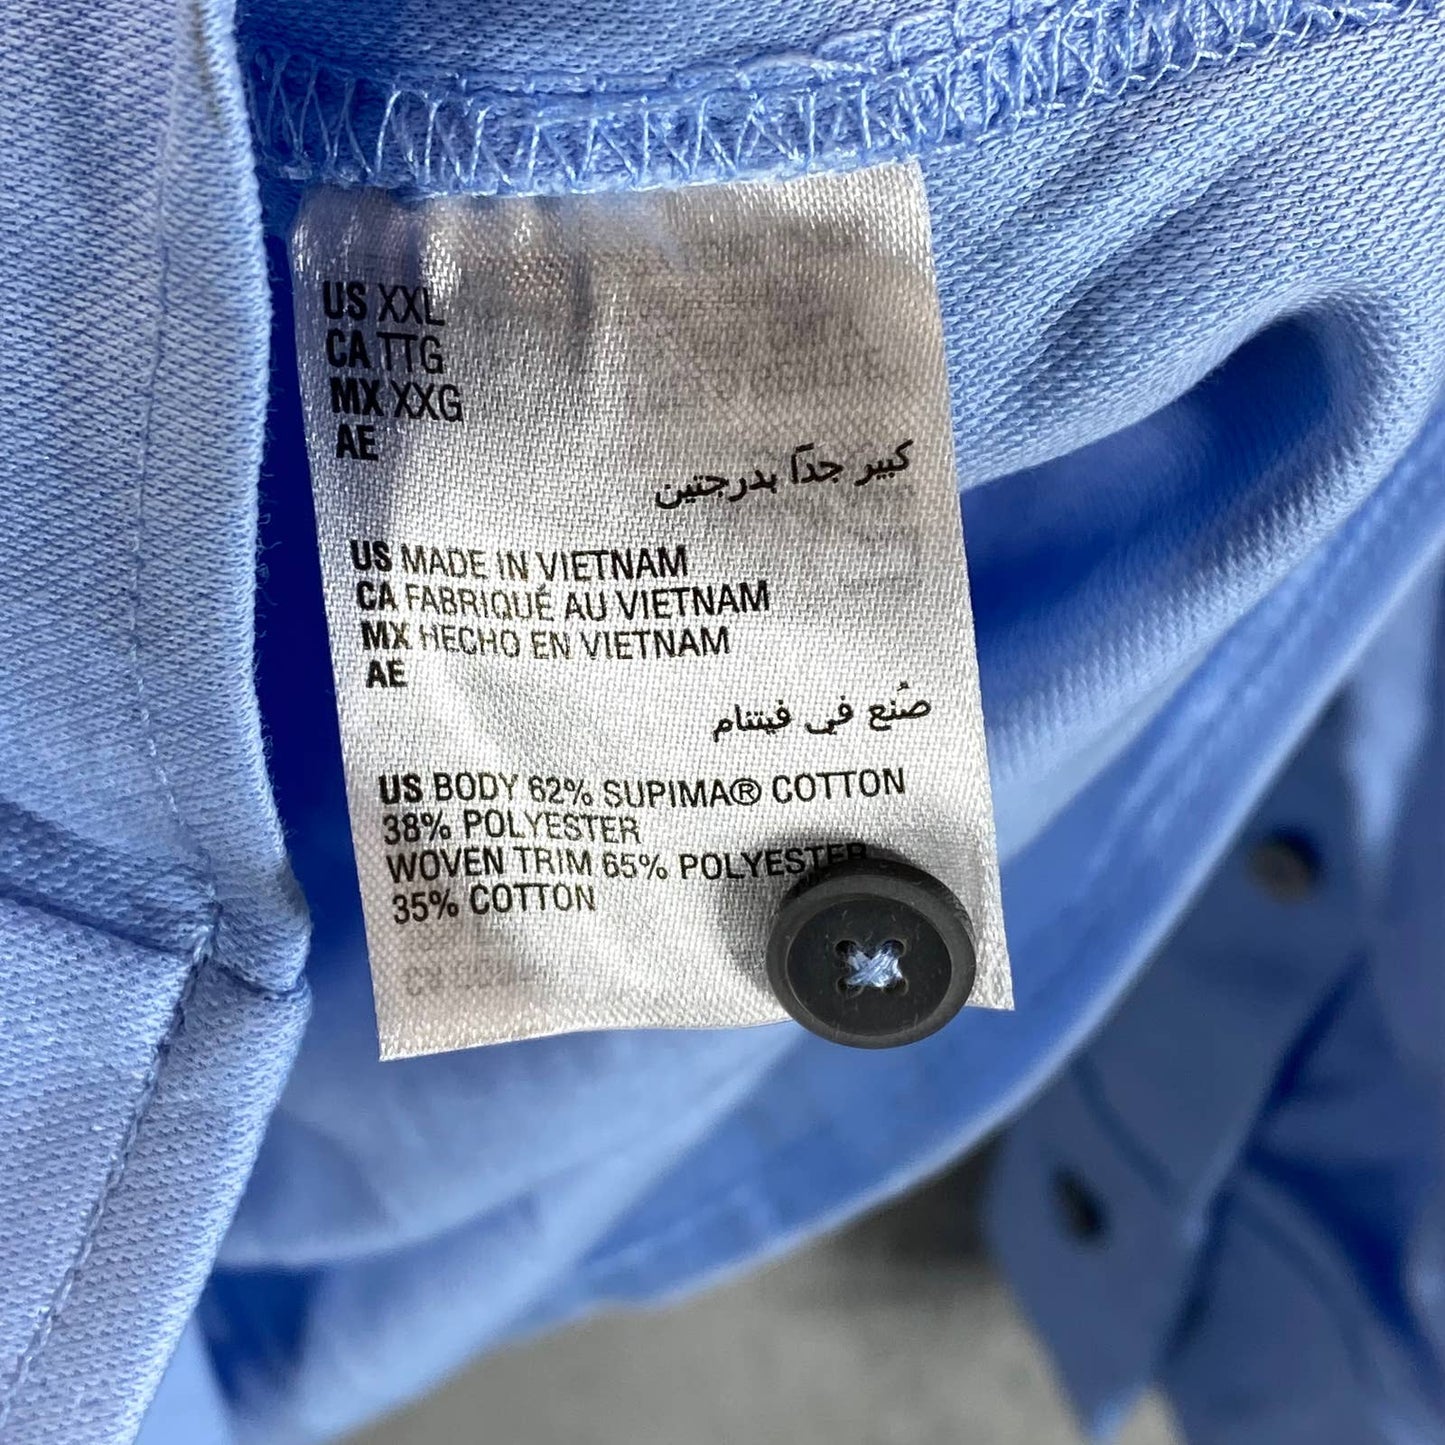 ALFANI Men's Pale Ink Blue Regular-Fit Cotton Birdseye Button-Up Shirt SZ XXL